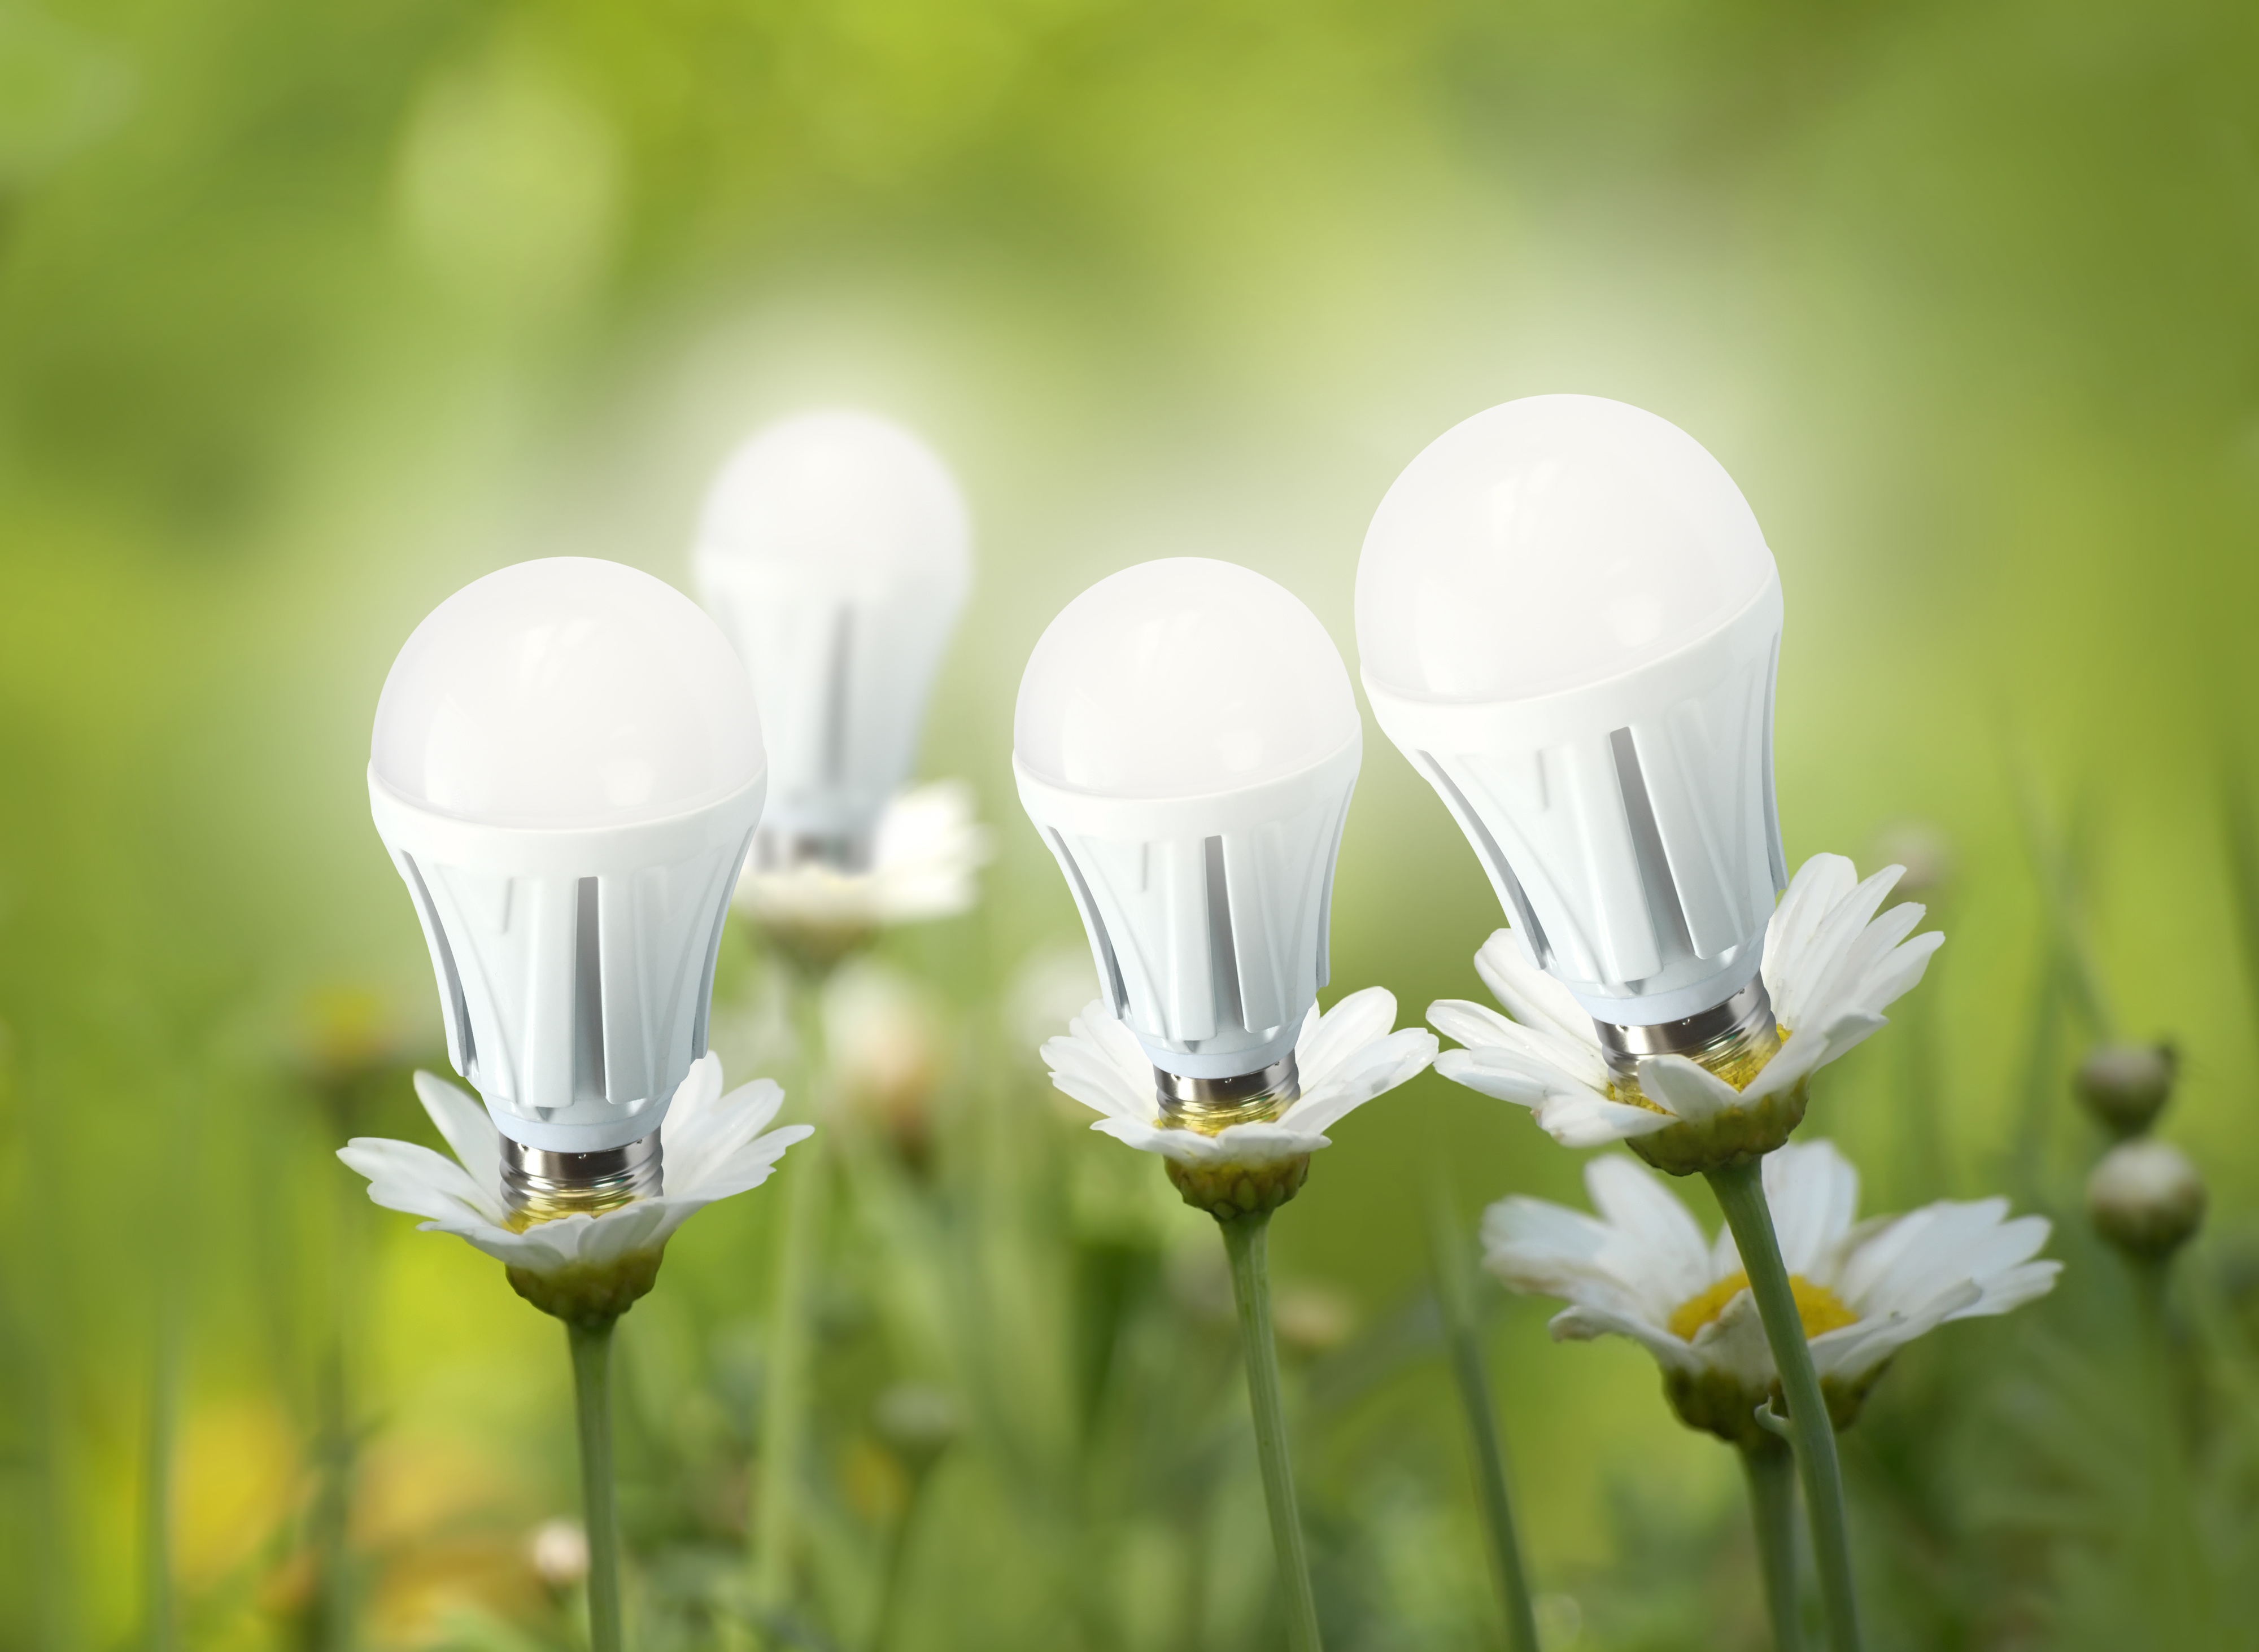 LED lighting: Top 3 purchasing tips